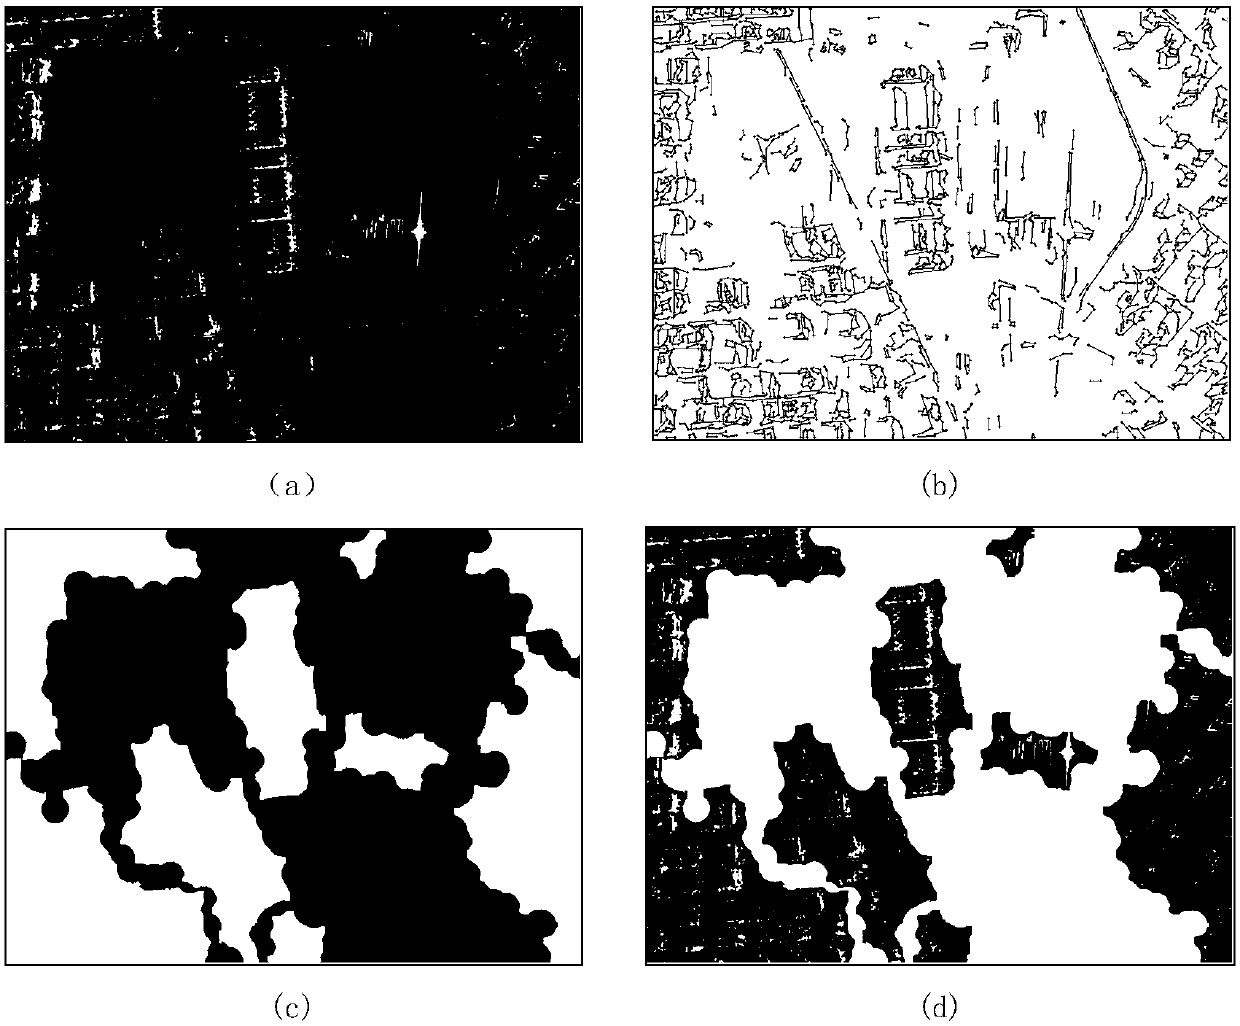 Two-stage clustering-based SAR image semantic segmentation method